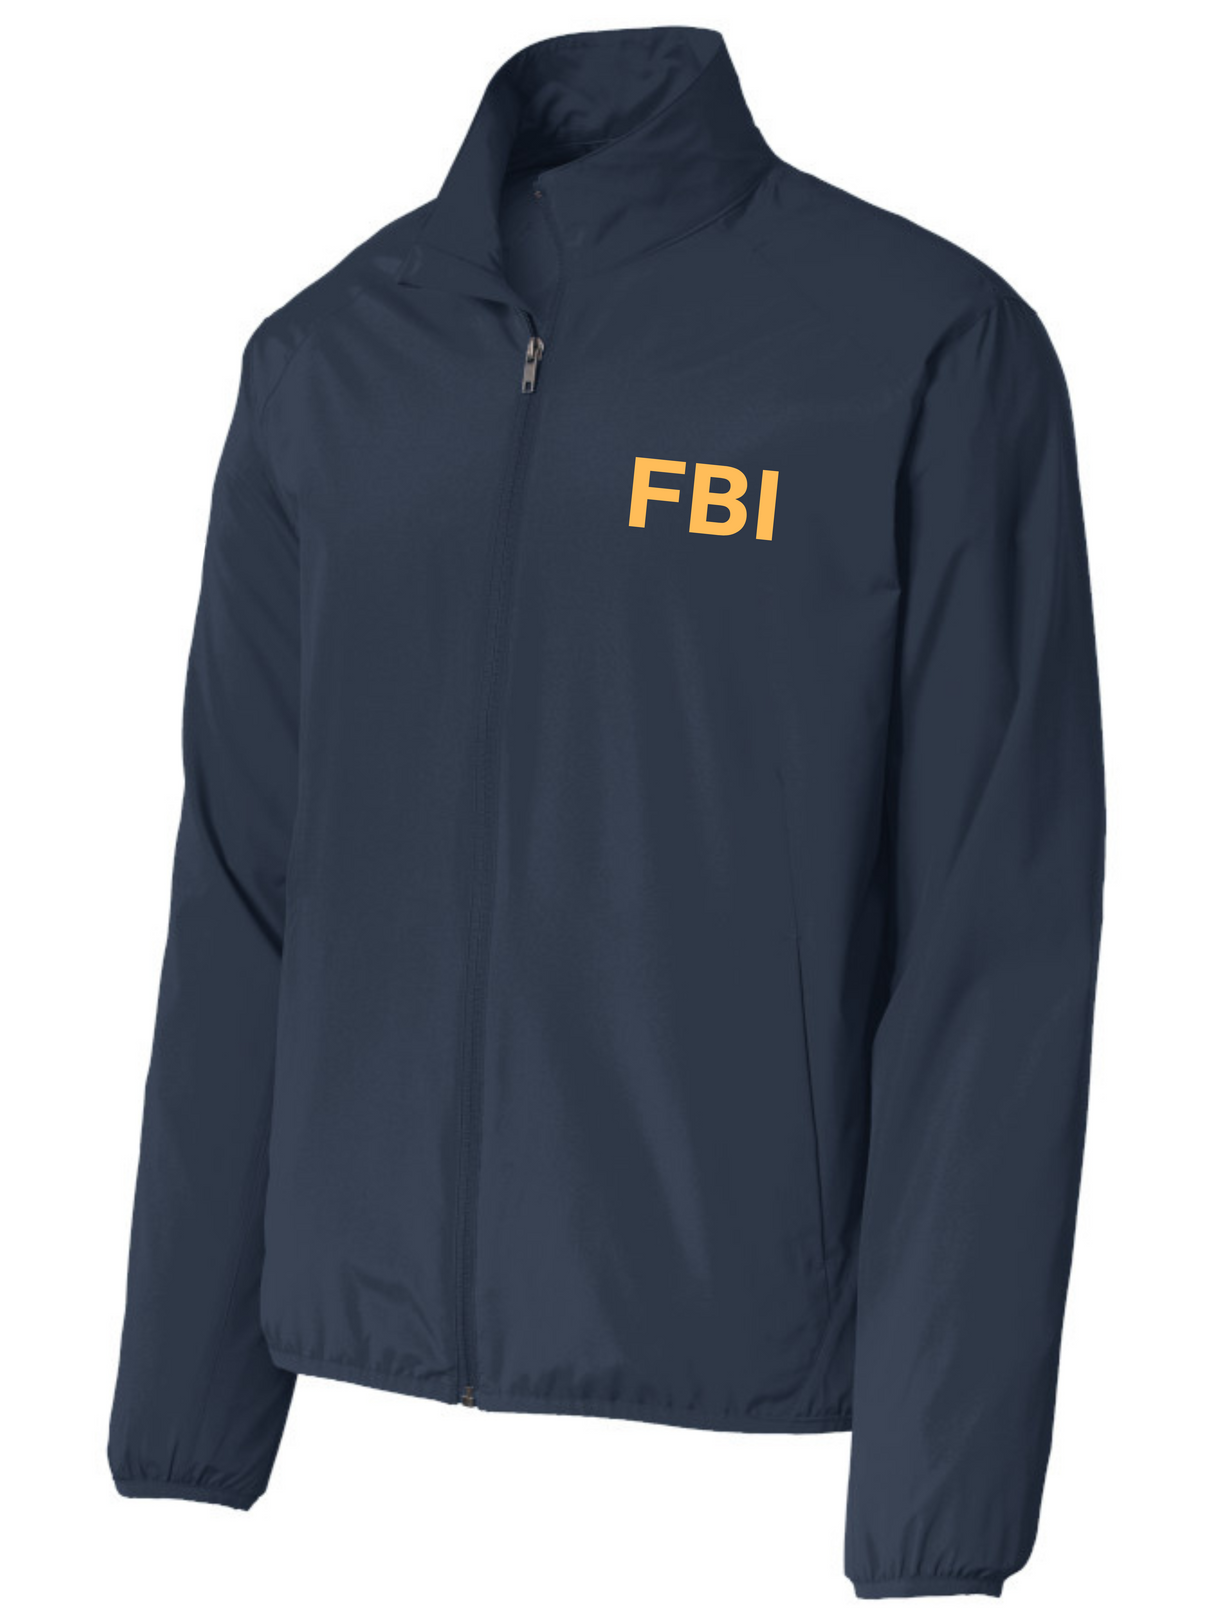 FBI Victim Assistance- Agency Identifier Jacket - FEDS Apparel